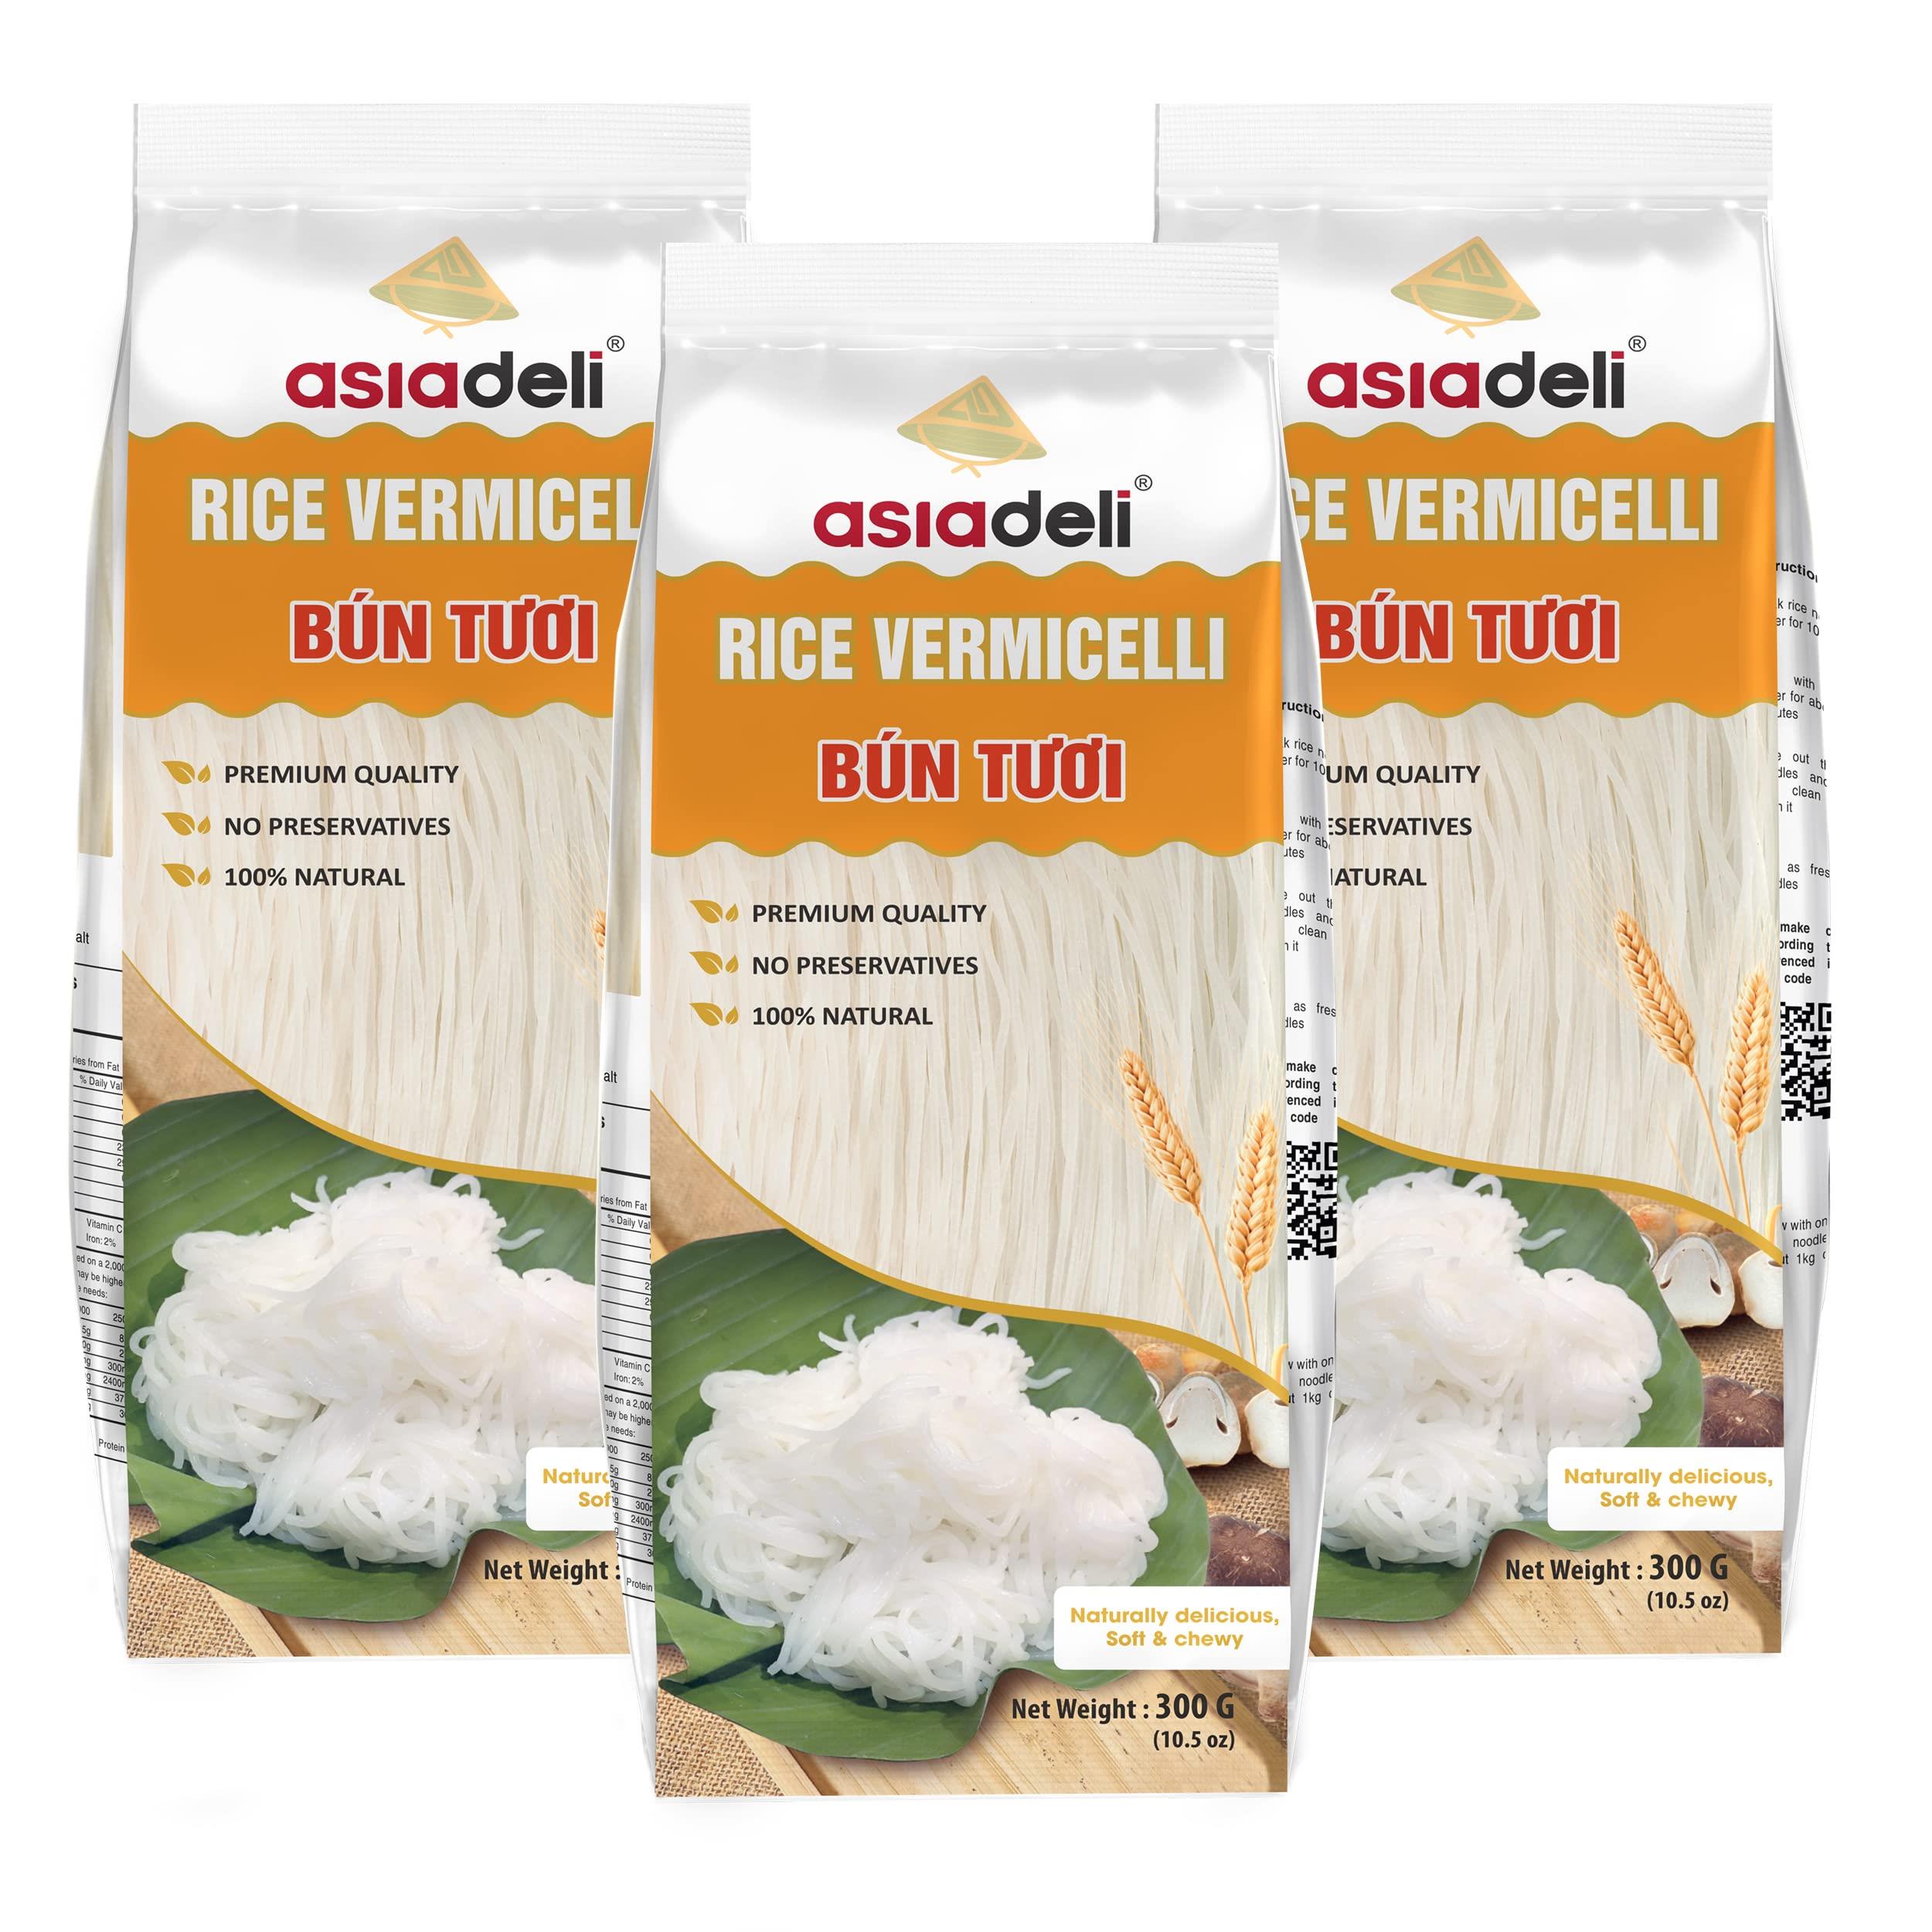 Asiadeli Rice Vermicelli, Premium Rice Noodles, Vietnamese Bun Tuoi for Asian Food - 10.5 oz. (Pack of 3 Bags)